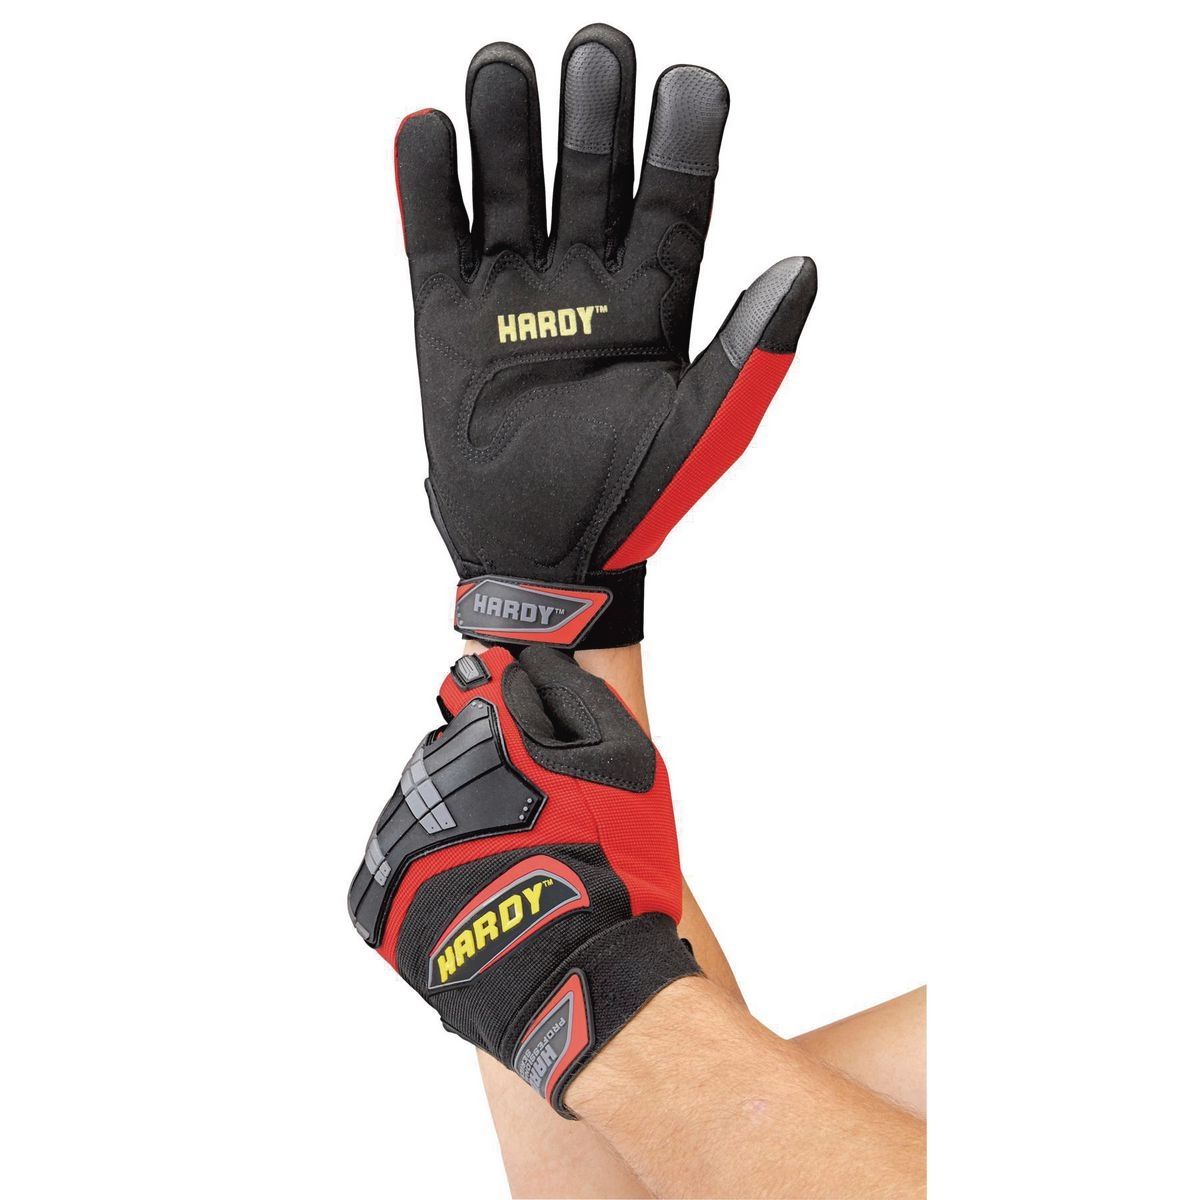 HARDY Professional Mechanics Gloves - Medium